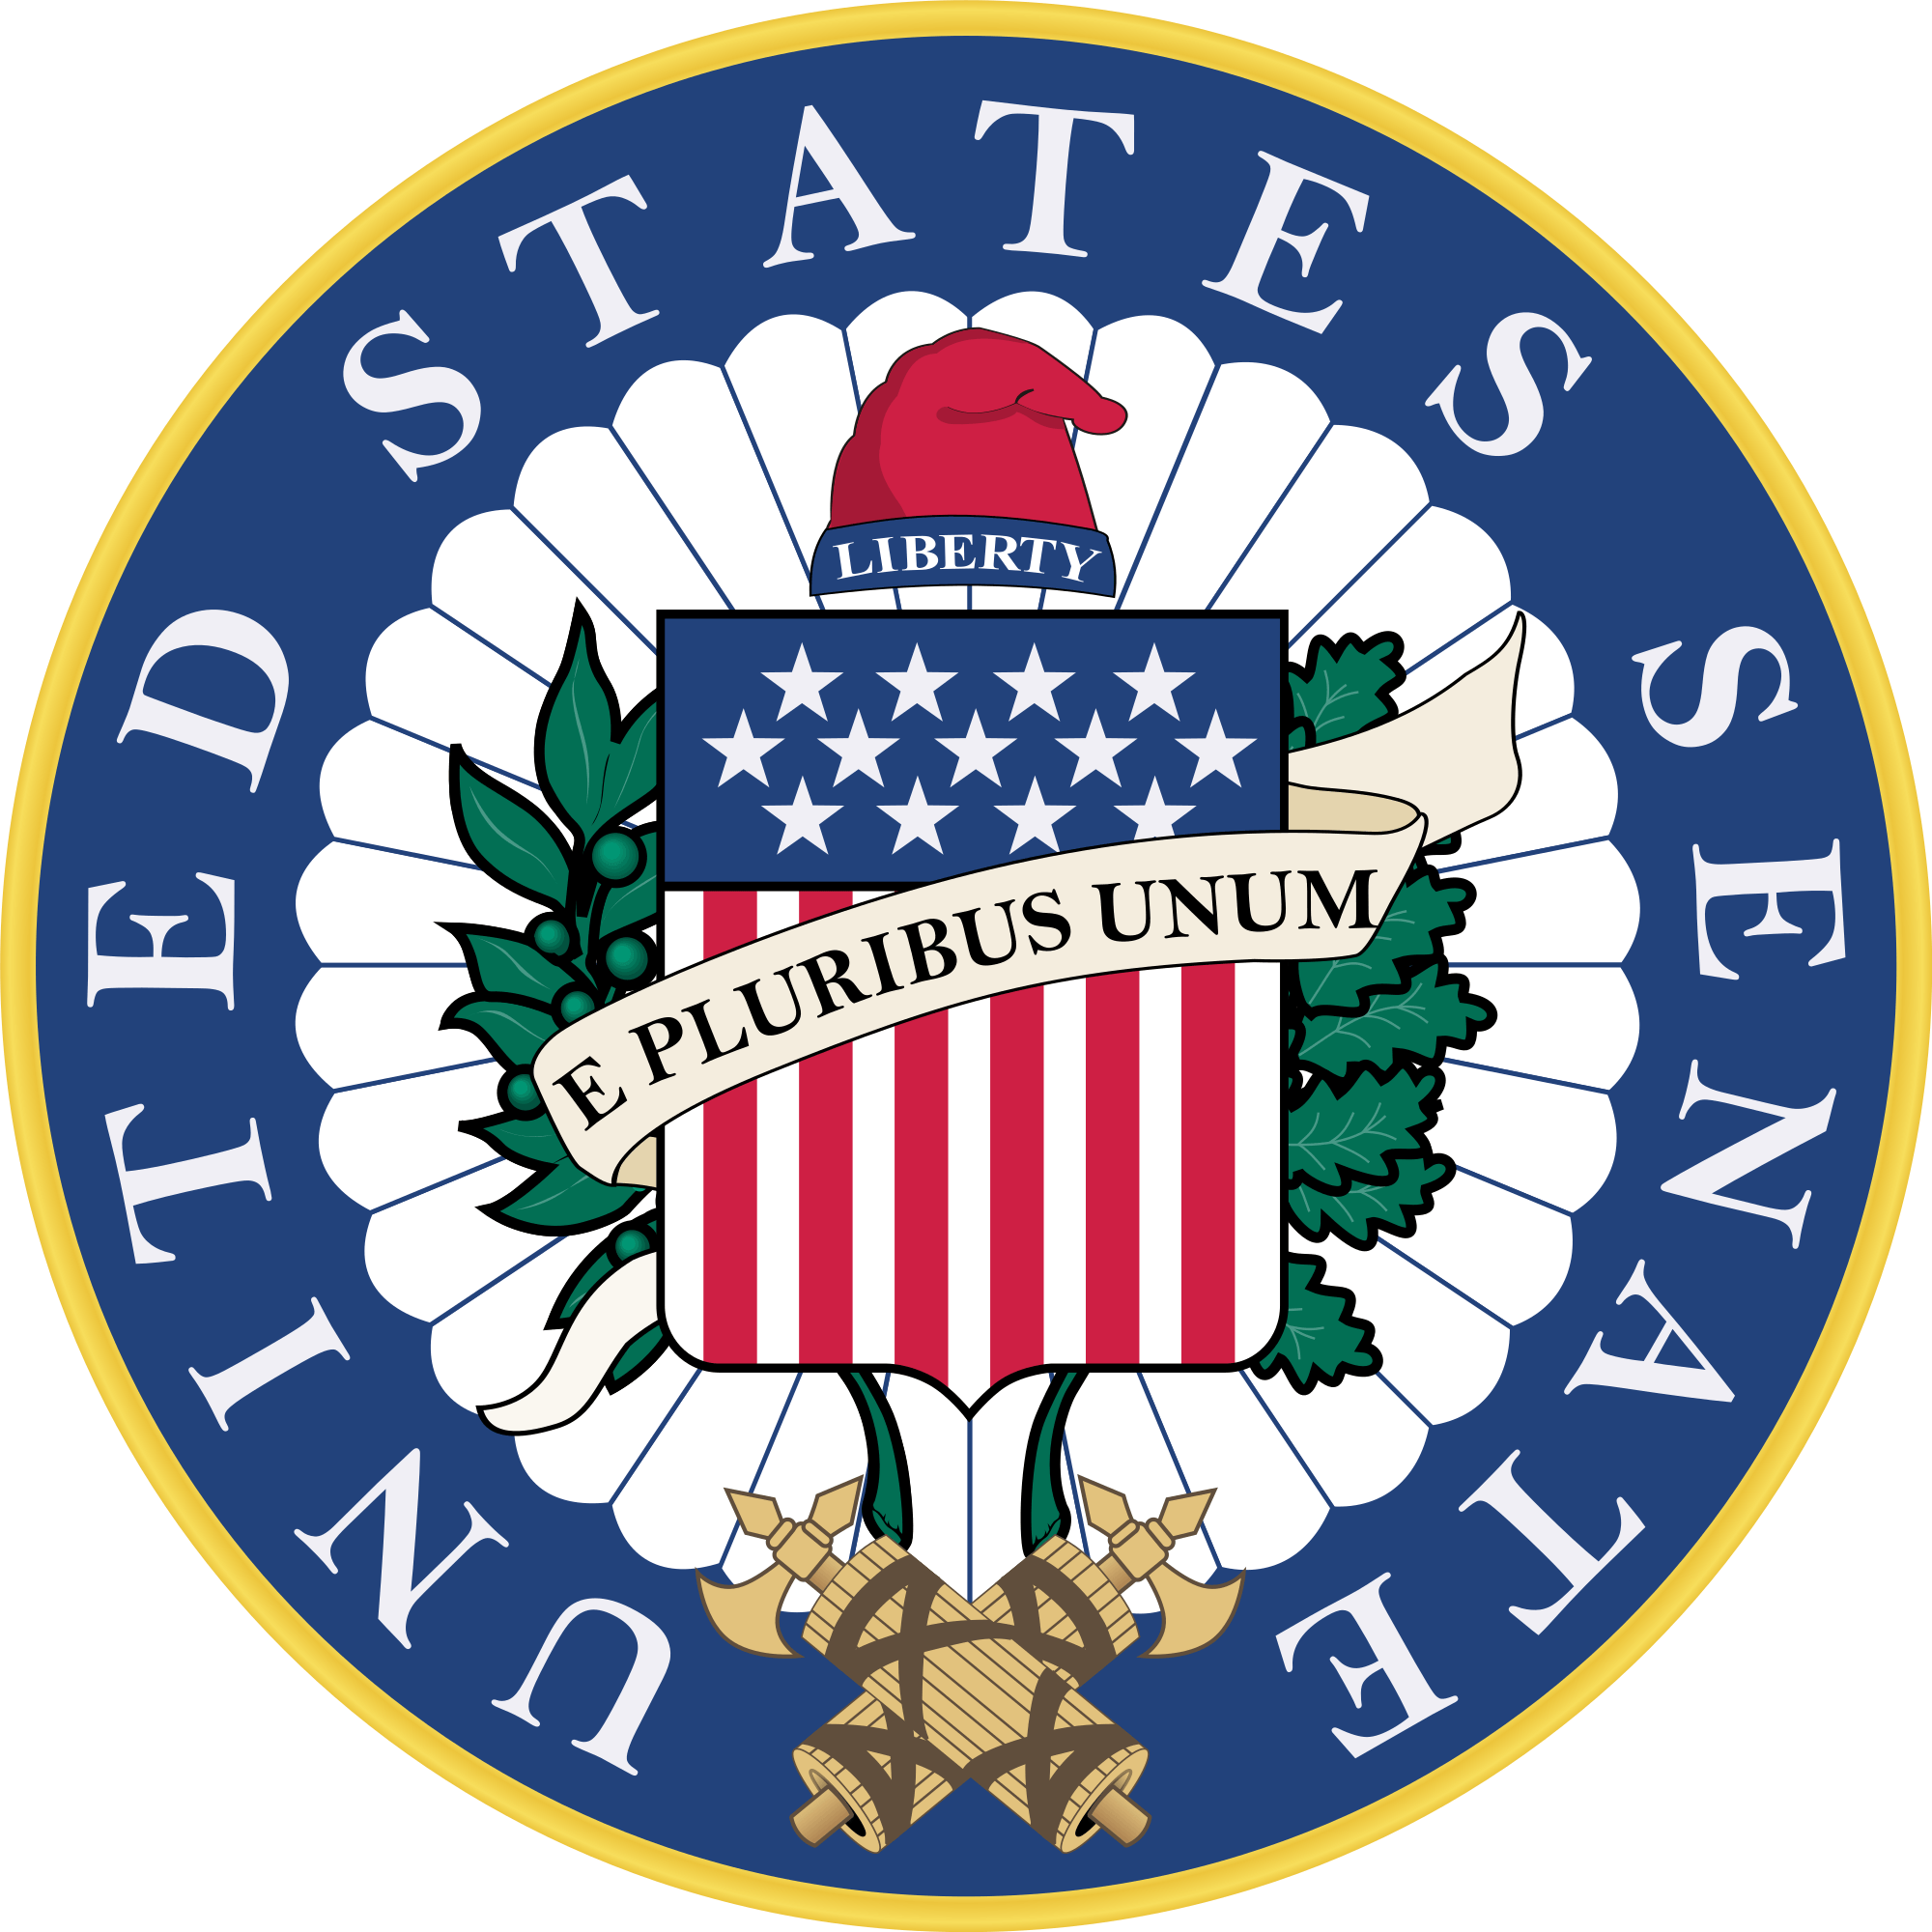 Senate Logo - Seal of the United States Senate